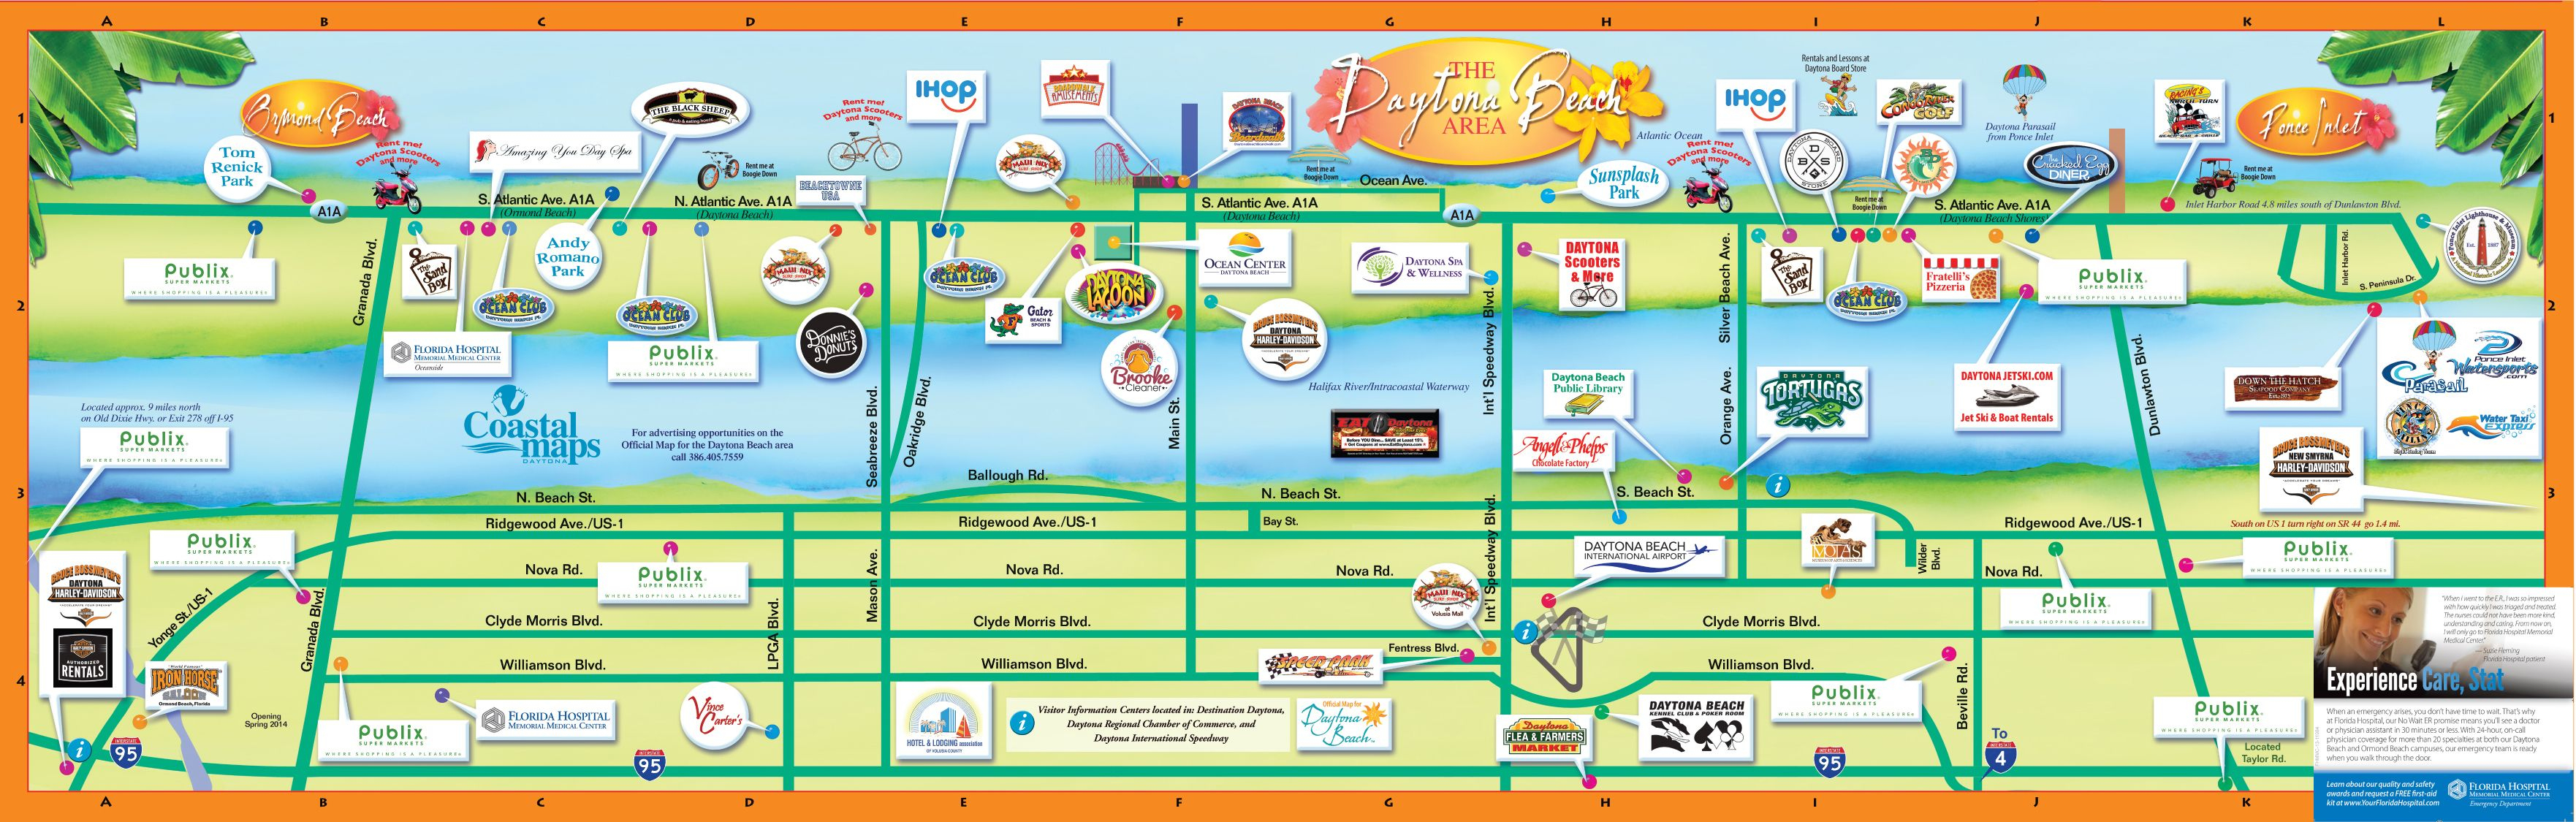 Daytona Beach Hotel Map 2016 - Google Search | Vaca 2016 - Map Of Daytona Beach Florida